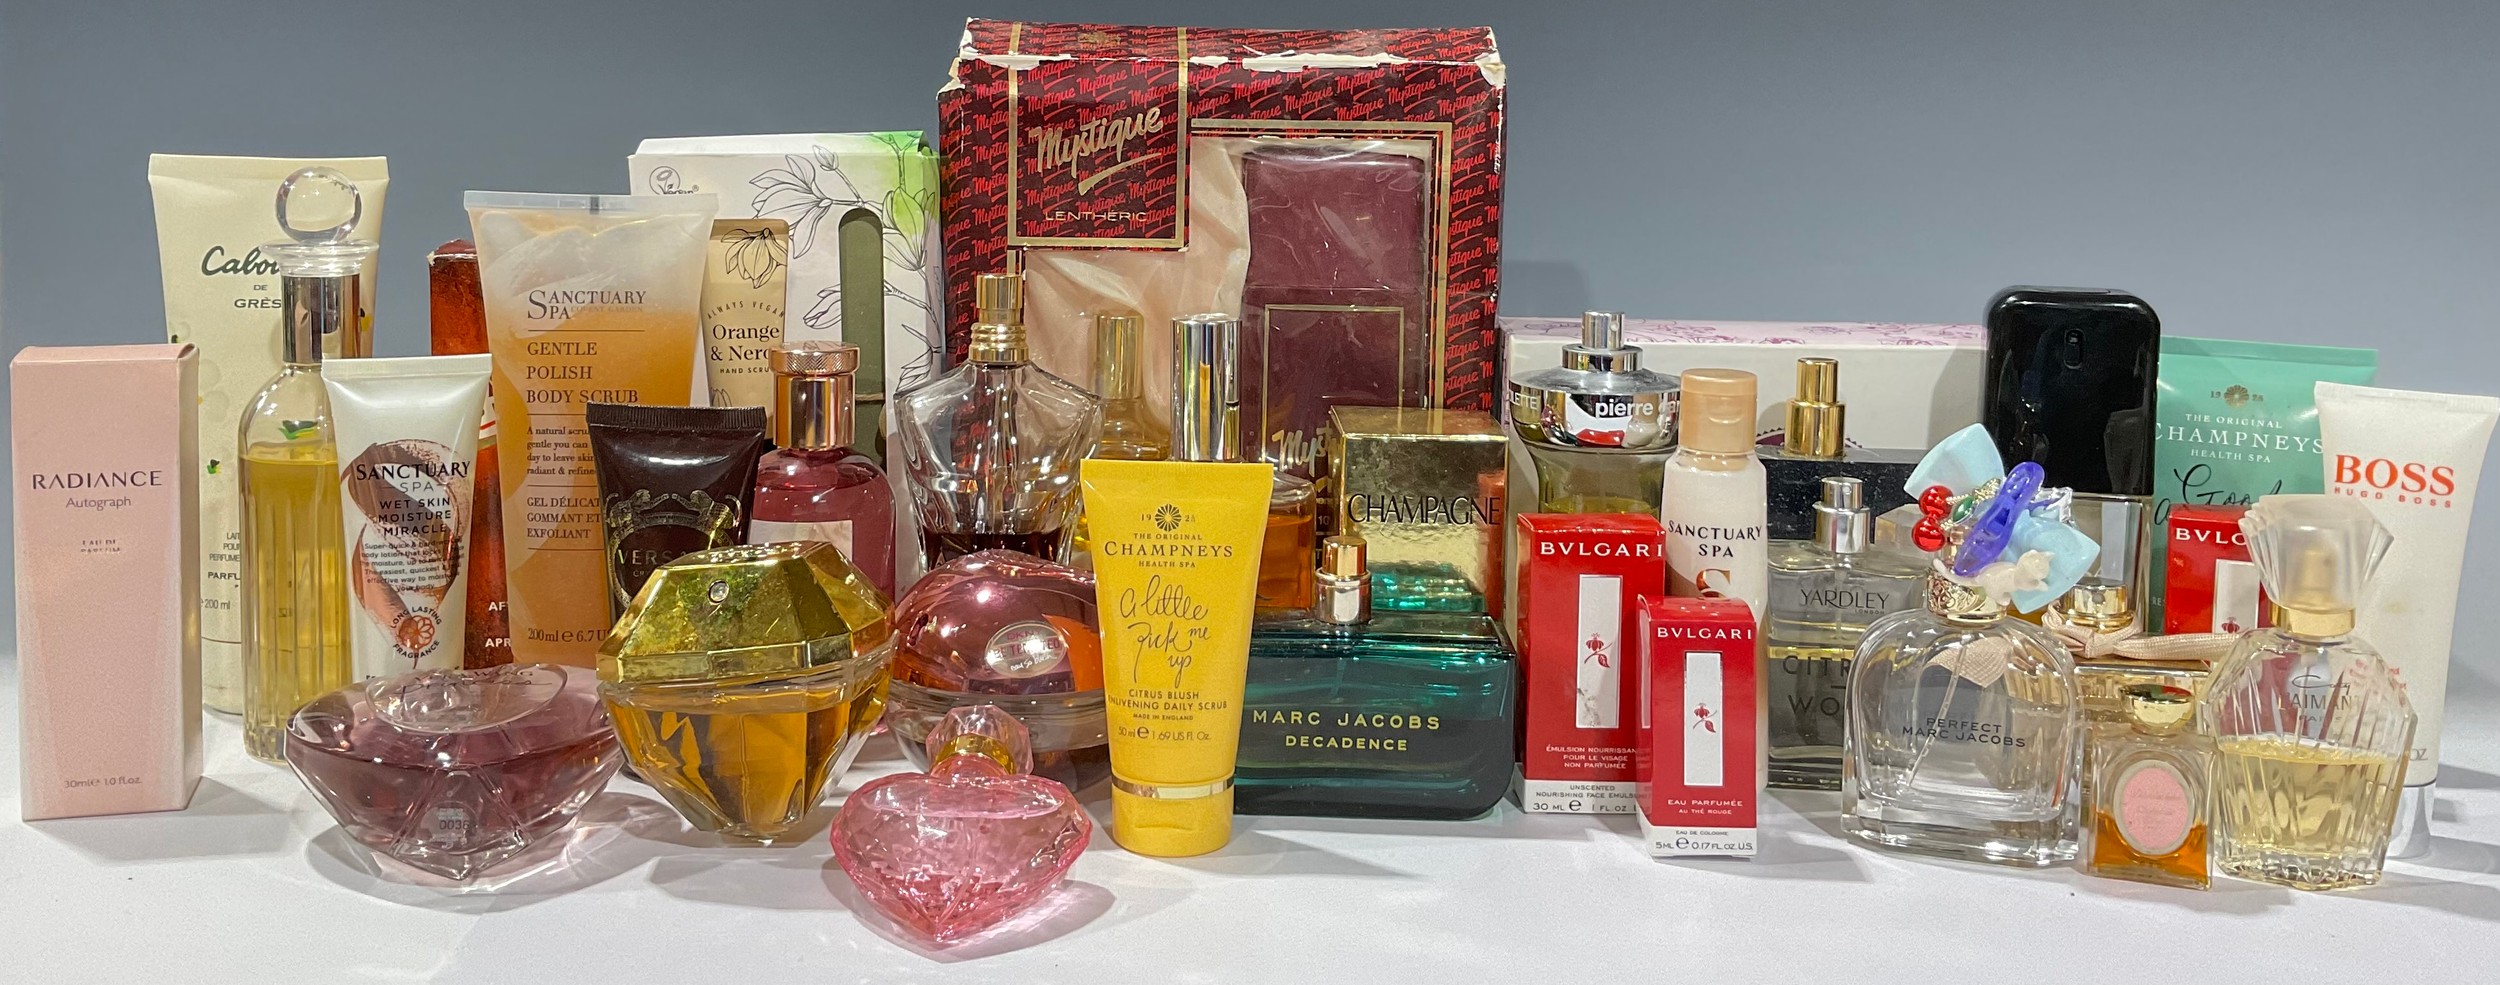 Perfumes & Fragrances - a quantity of fragrances including Jean Paul Gaultier, YSL, Fendi, Marc